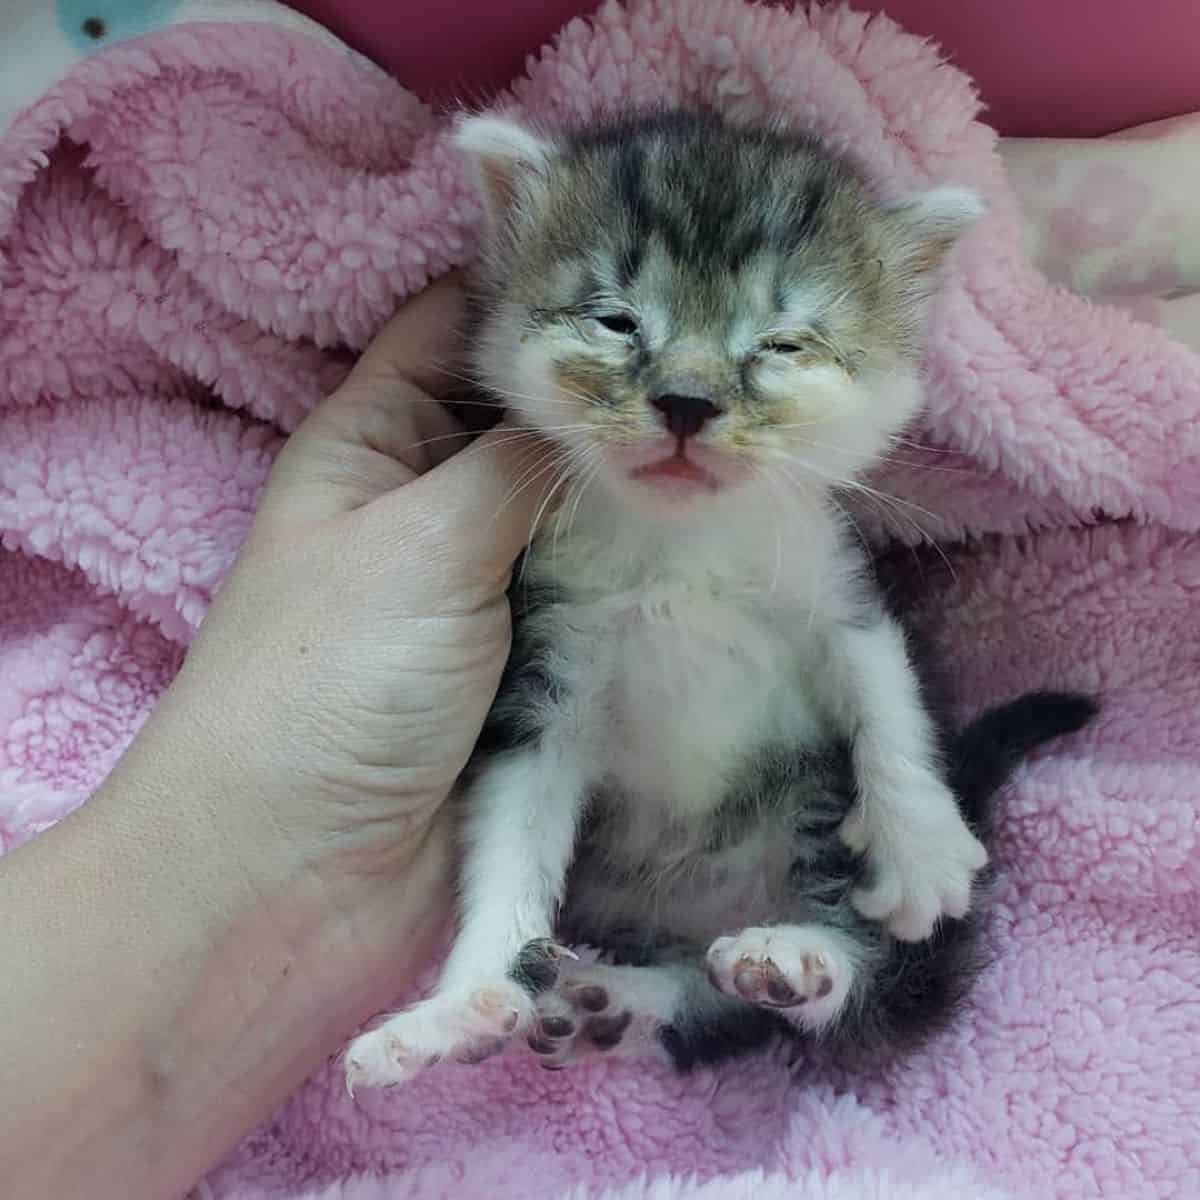 small kitten on a pink blanket